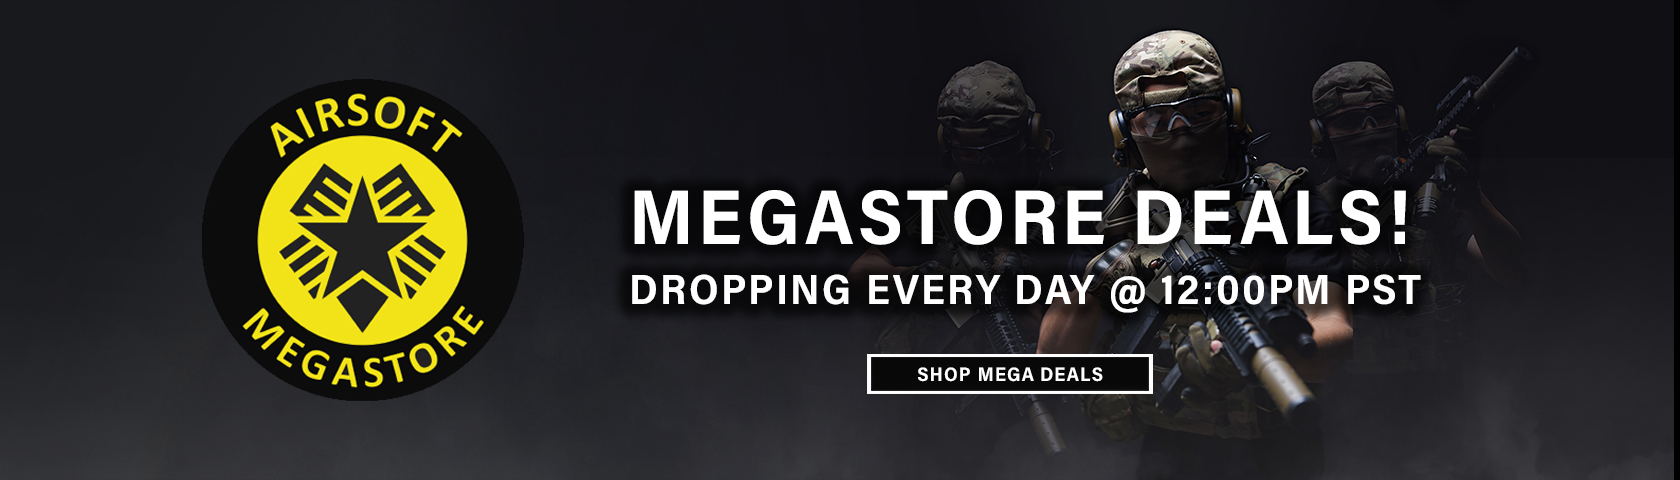 Mega Deal Promo